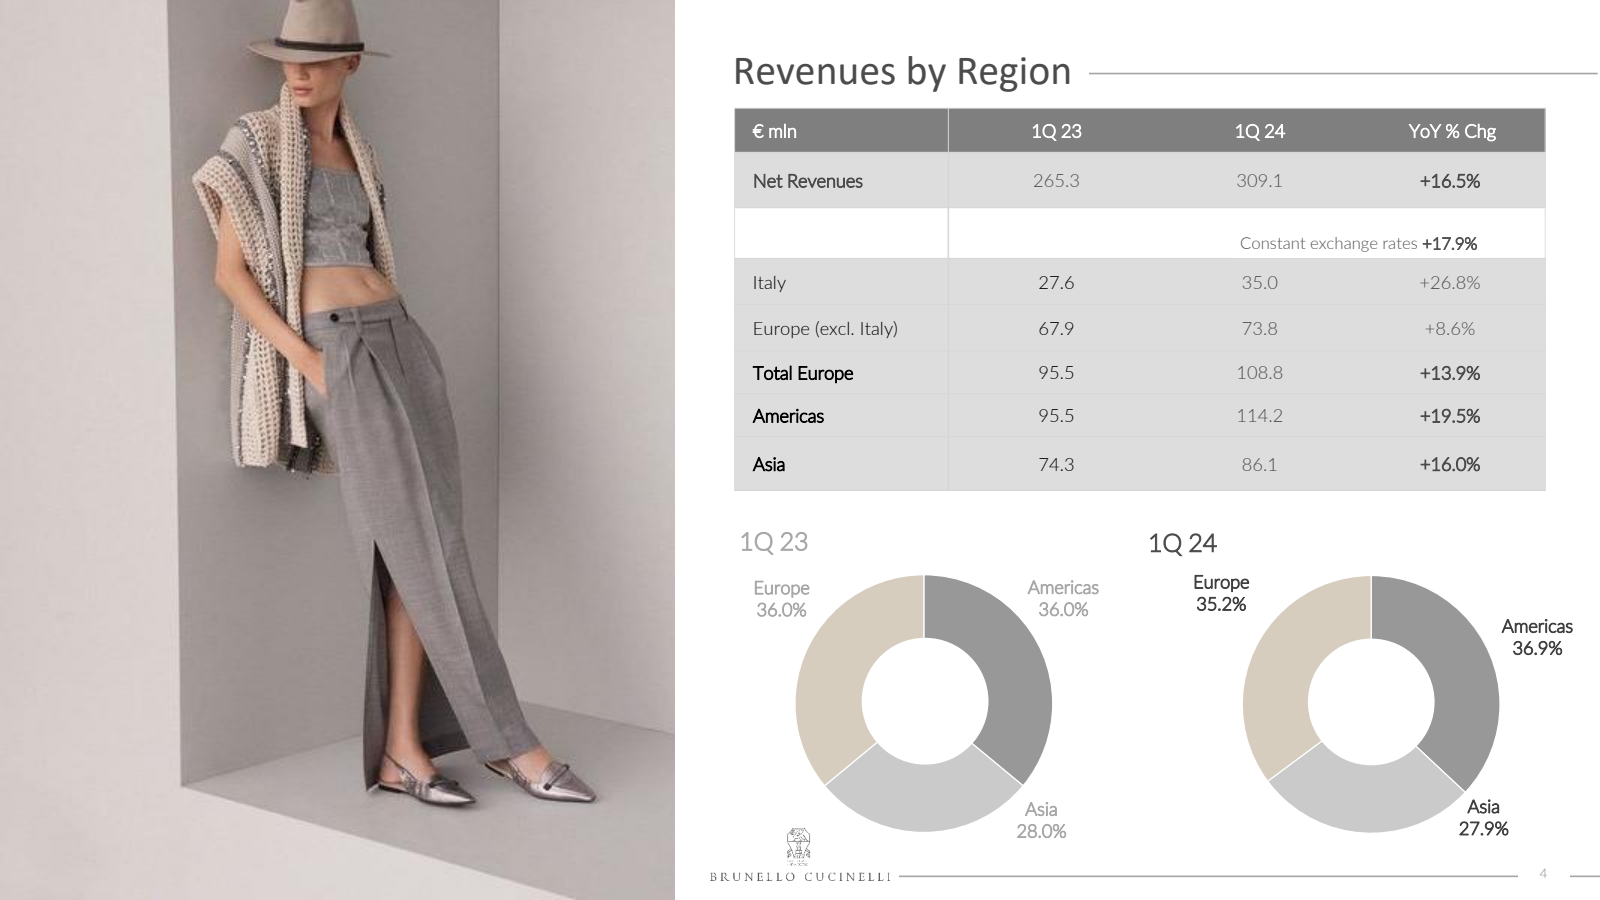 Revenues by Region 
